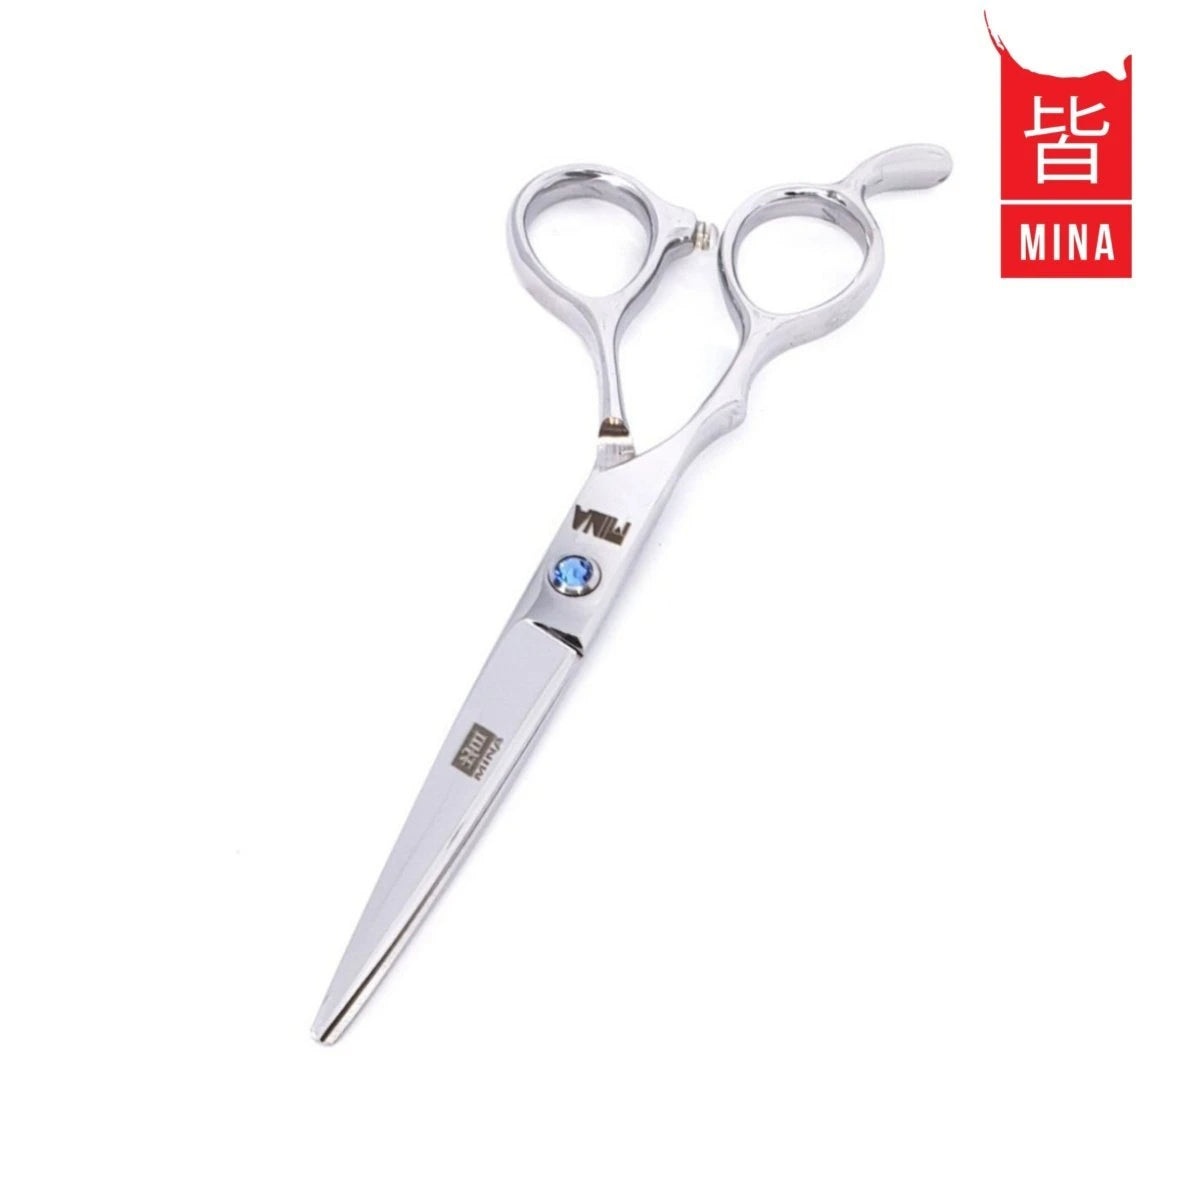 Mina Umi Beginner Scissor For Haircutting